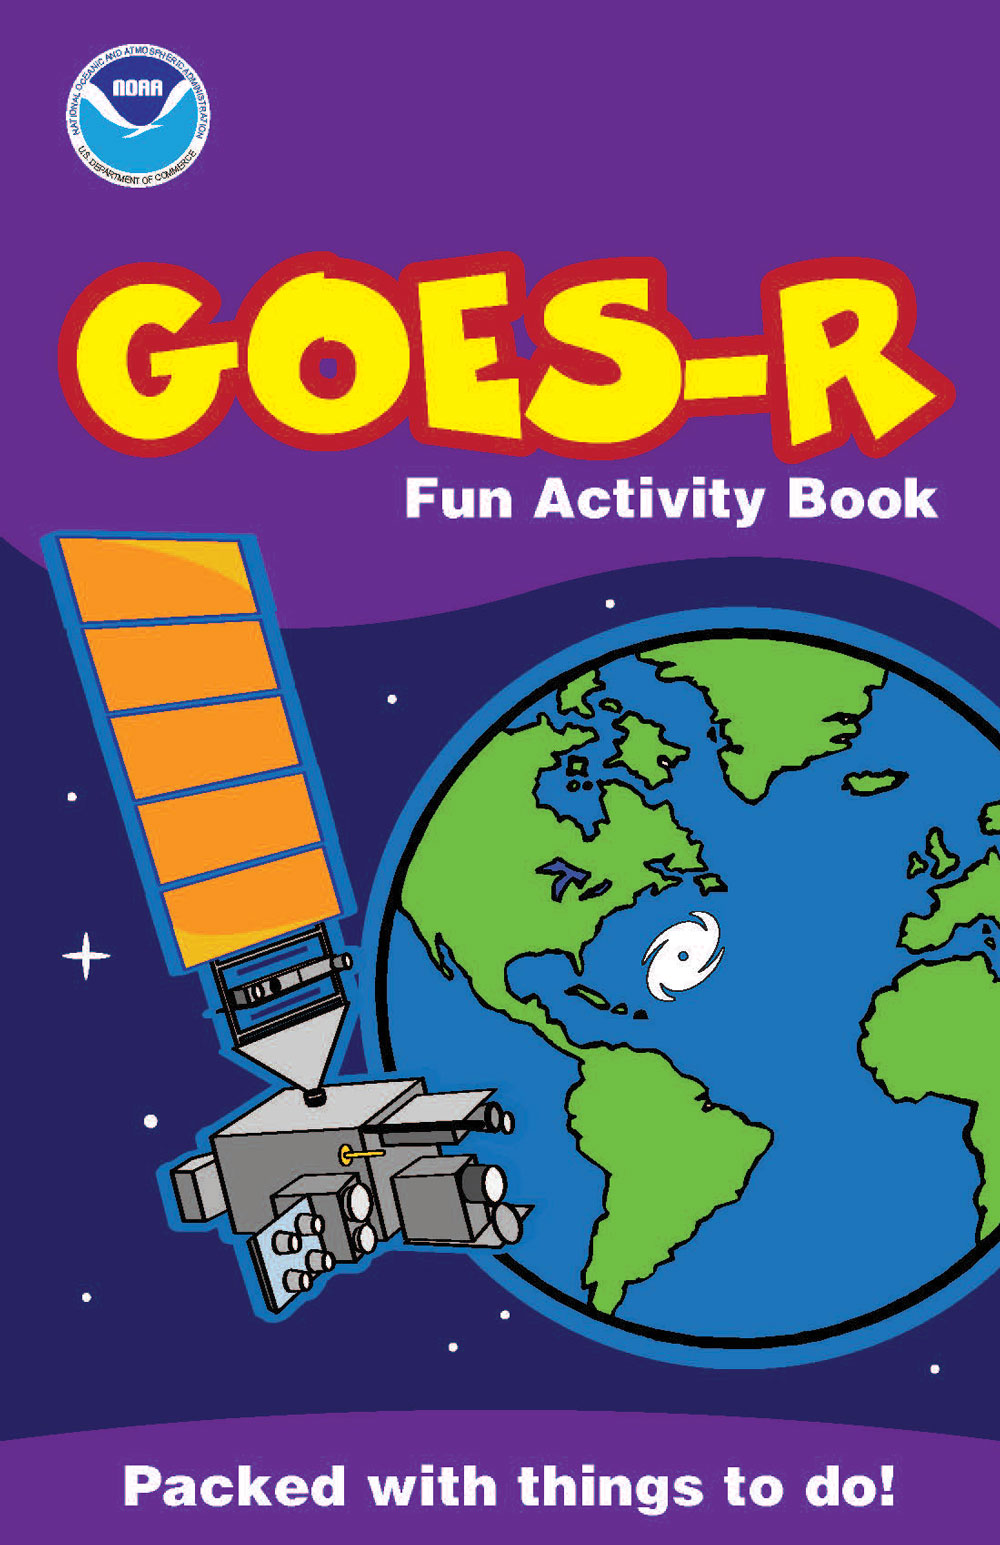 SGOES-R Fun Activity Book: